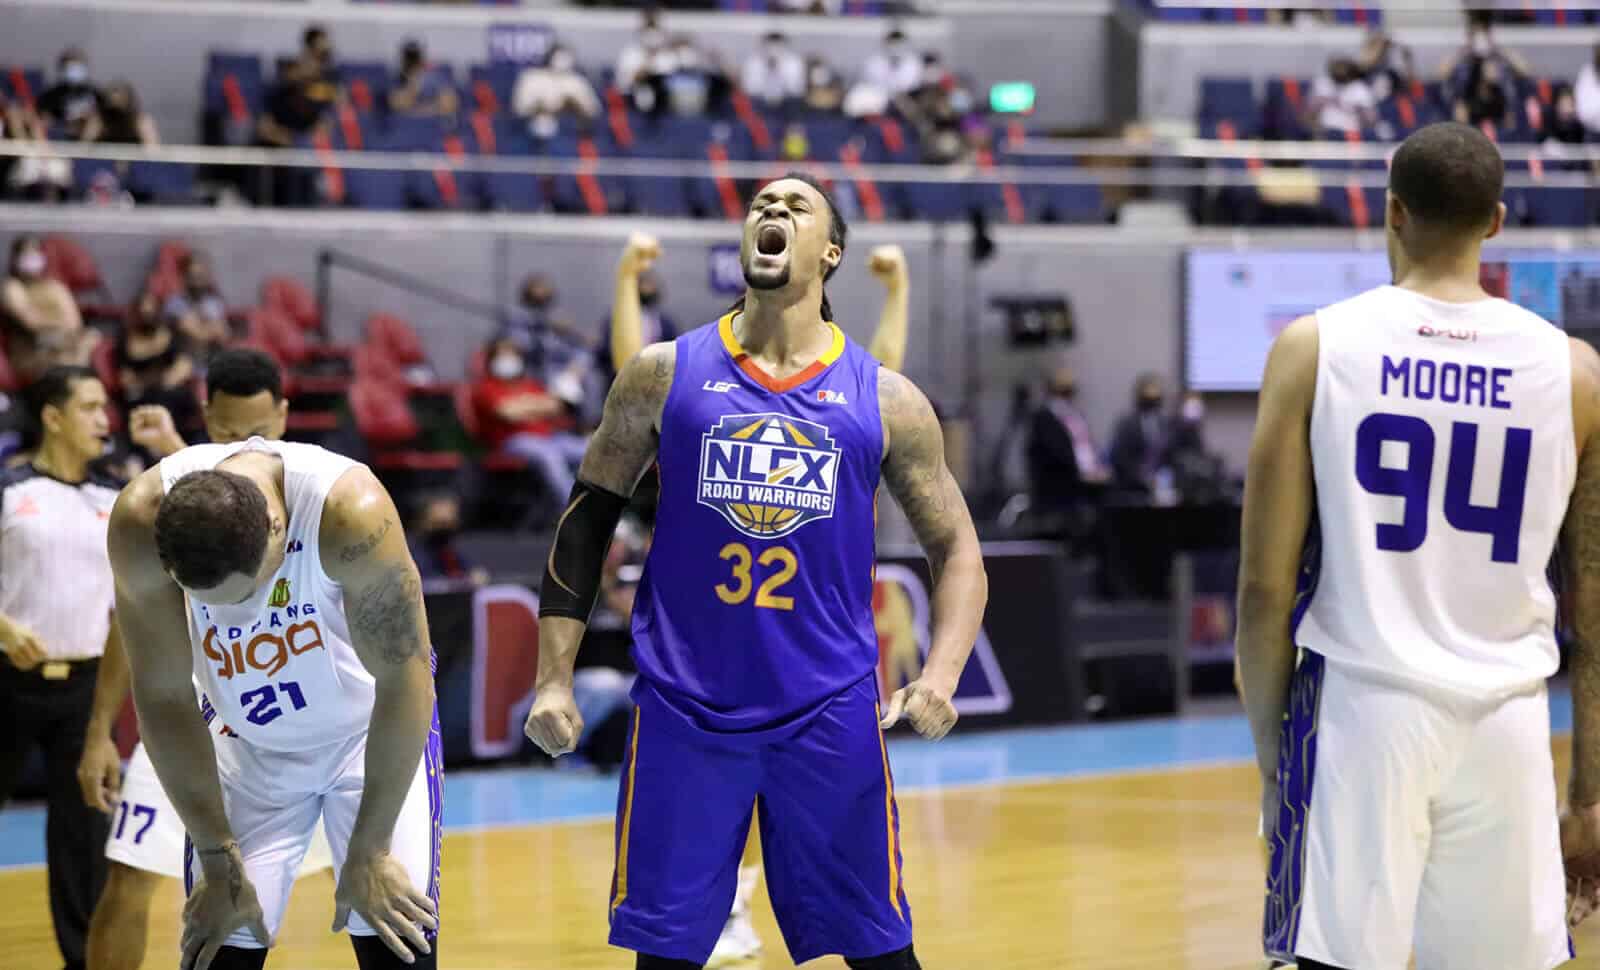 NLEX basketball players spoil TNT's PBA debut.